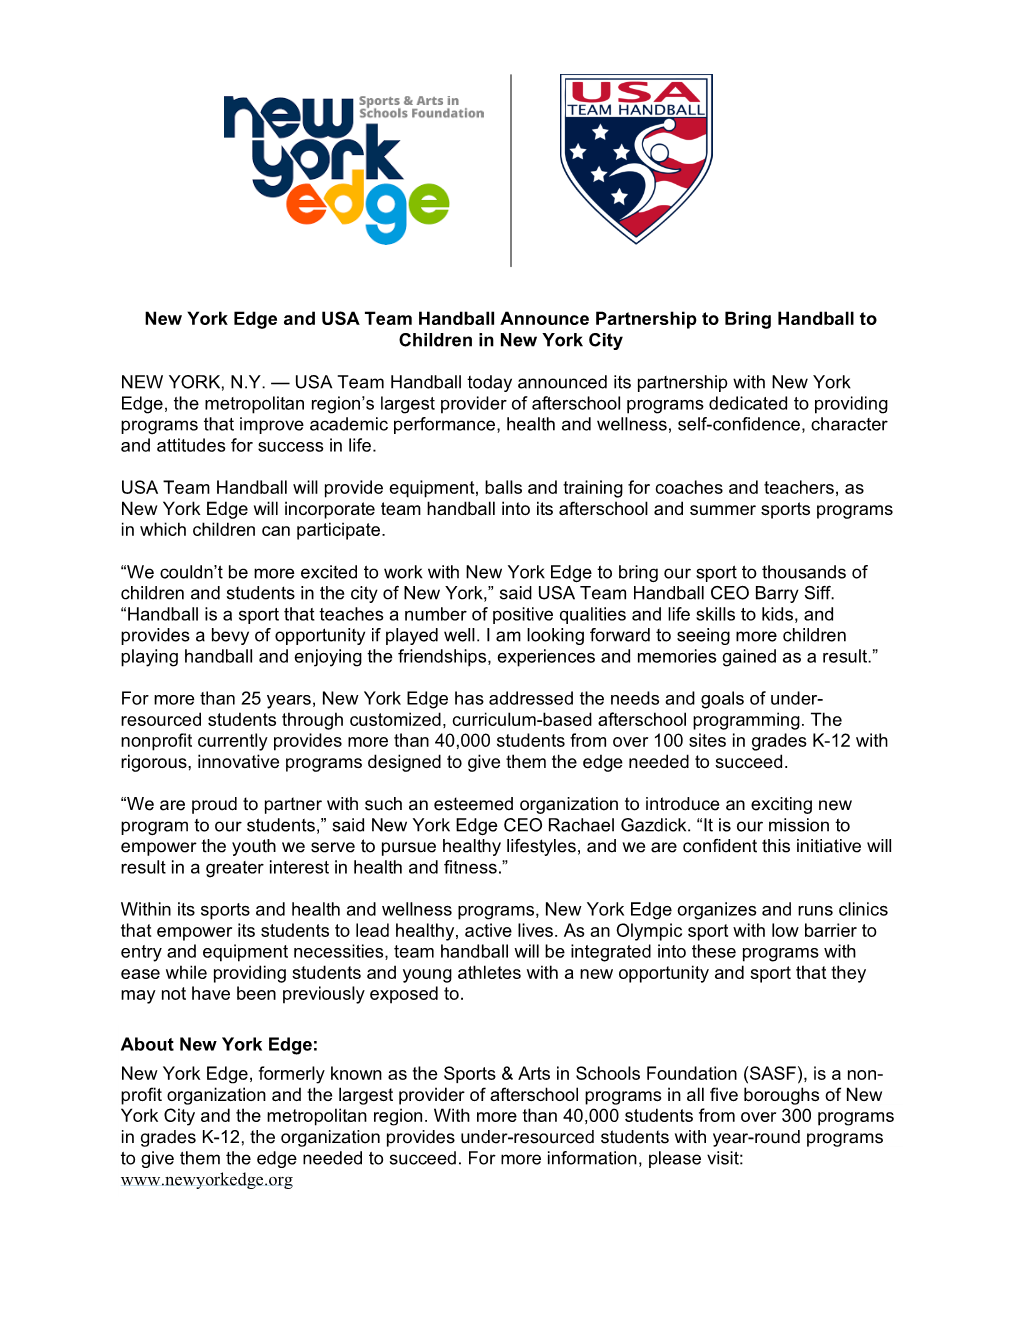 New York Edge and USA Team Handball Announce Partnership to Bring Handball to Children in New York City